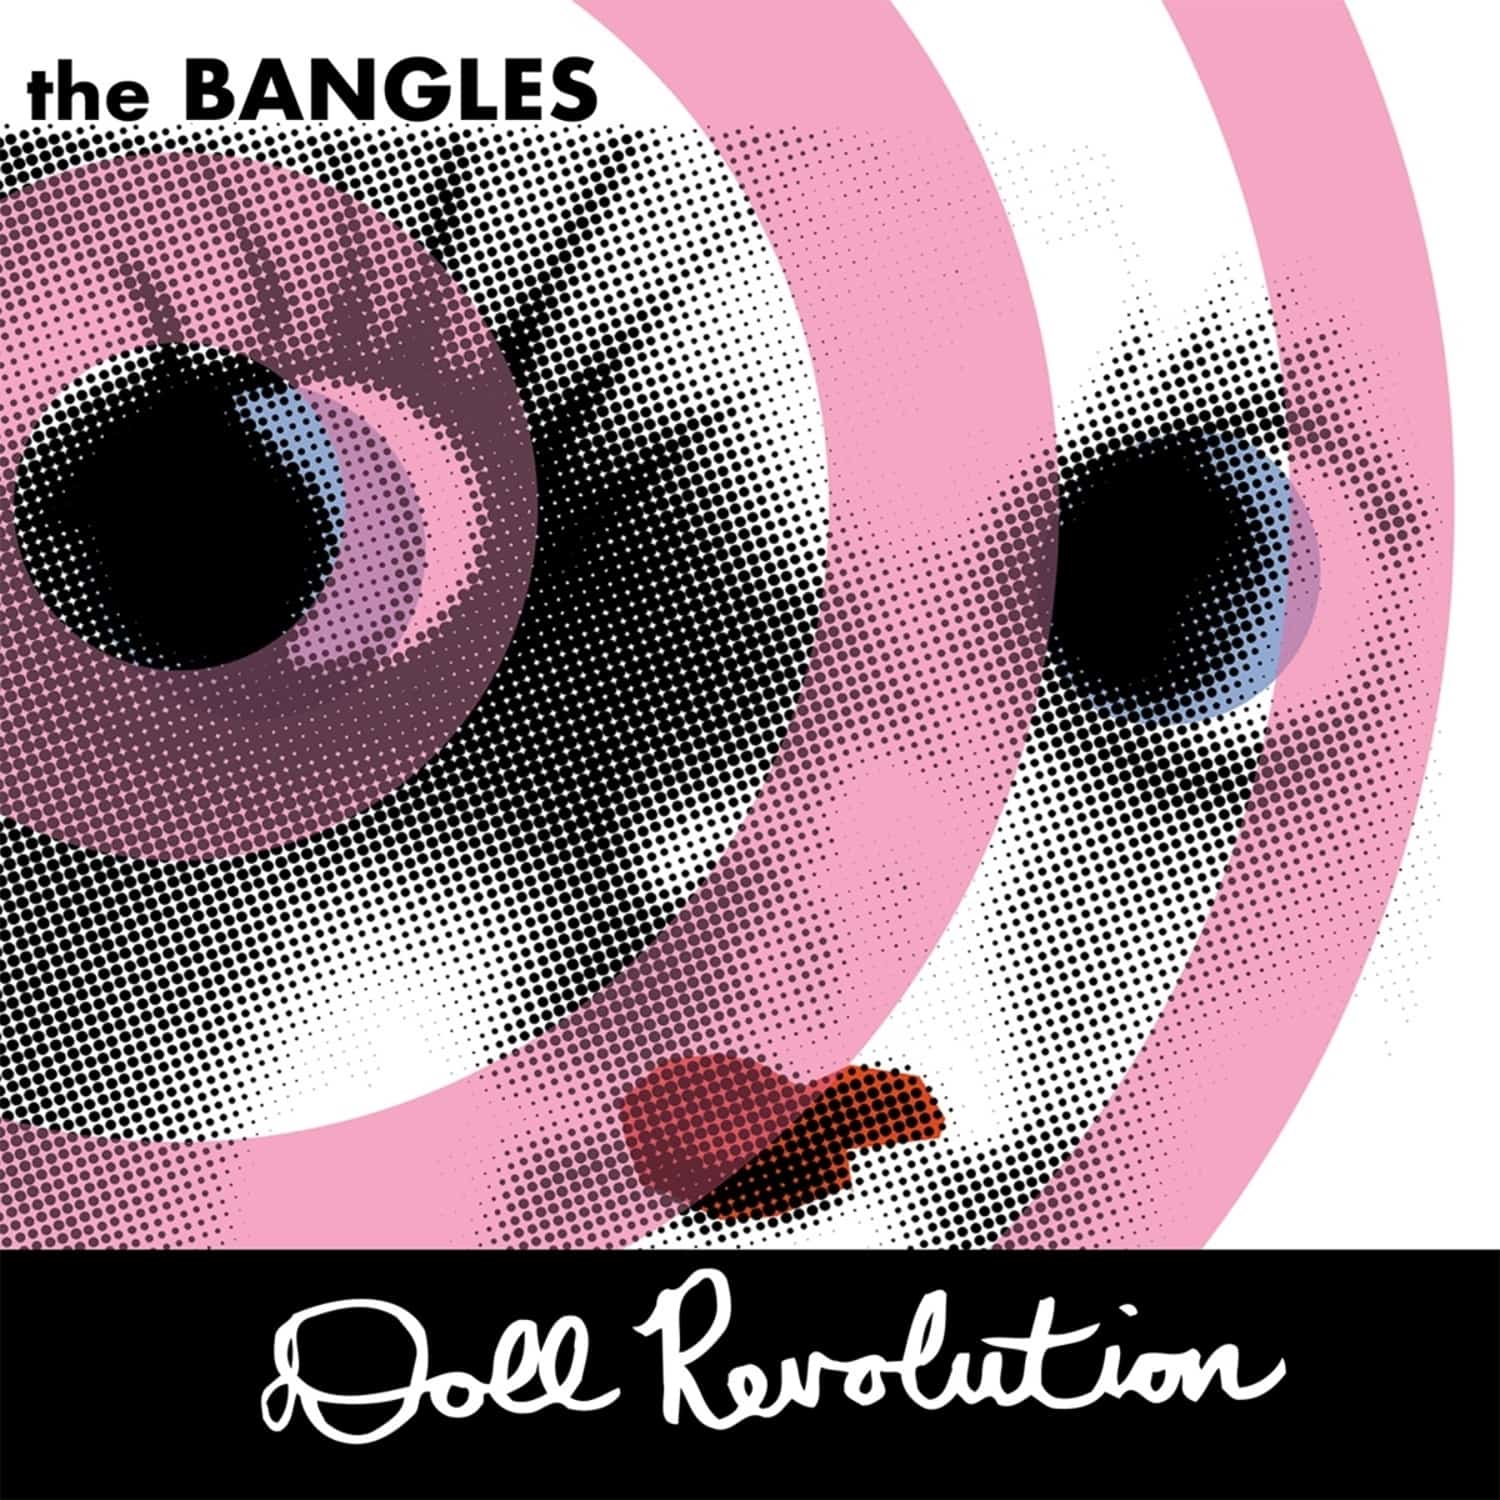  The Bangles - DOLL REVOLUTION 